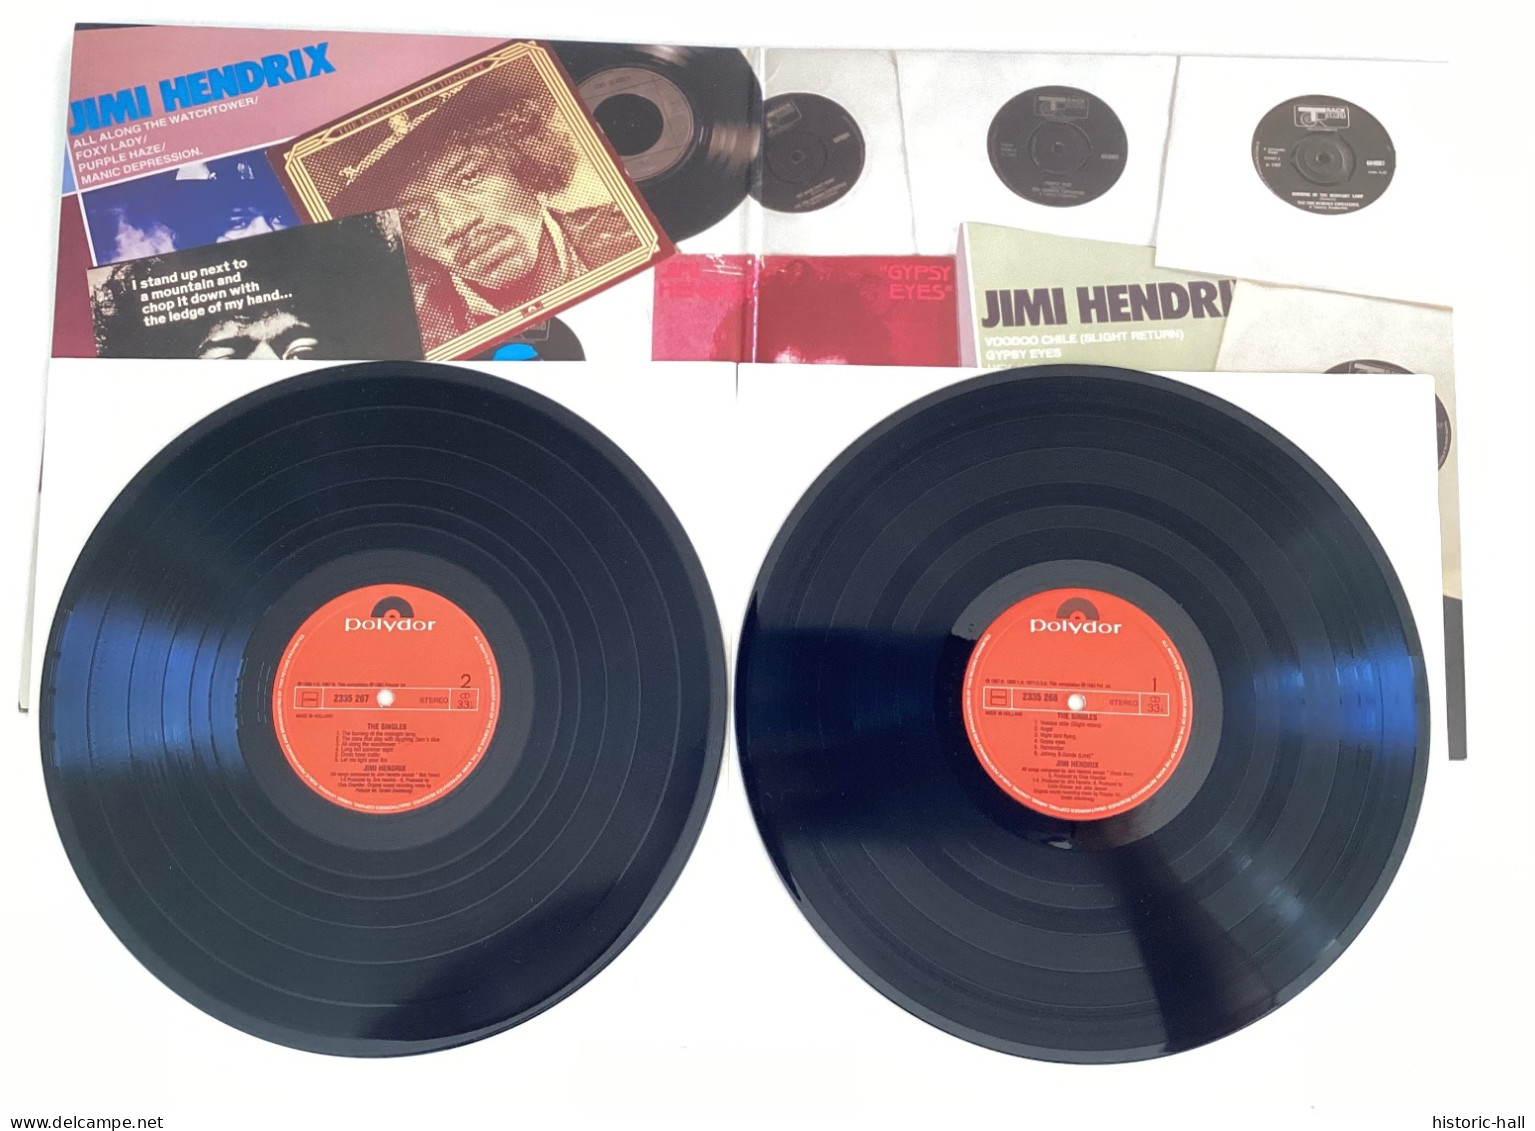 JIMI HENDRIX - The Singles Album - 2 LP - 1983 - Holland Press - Rock